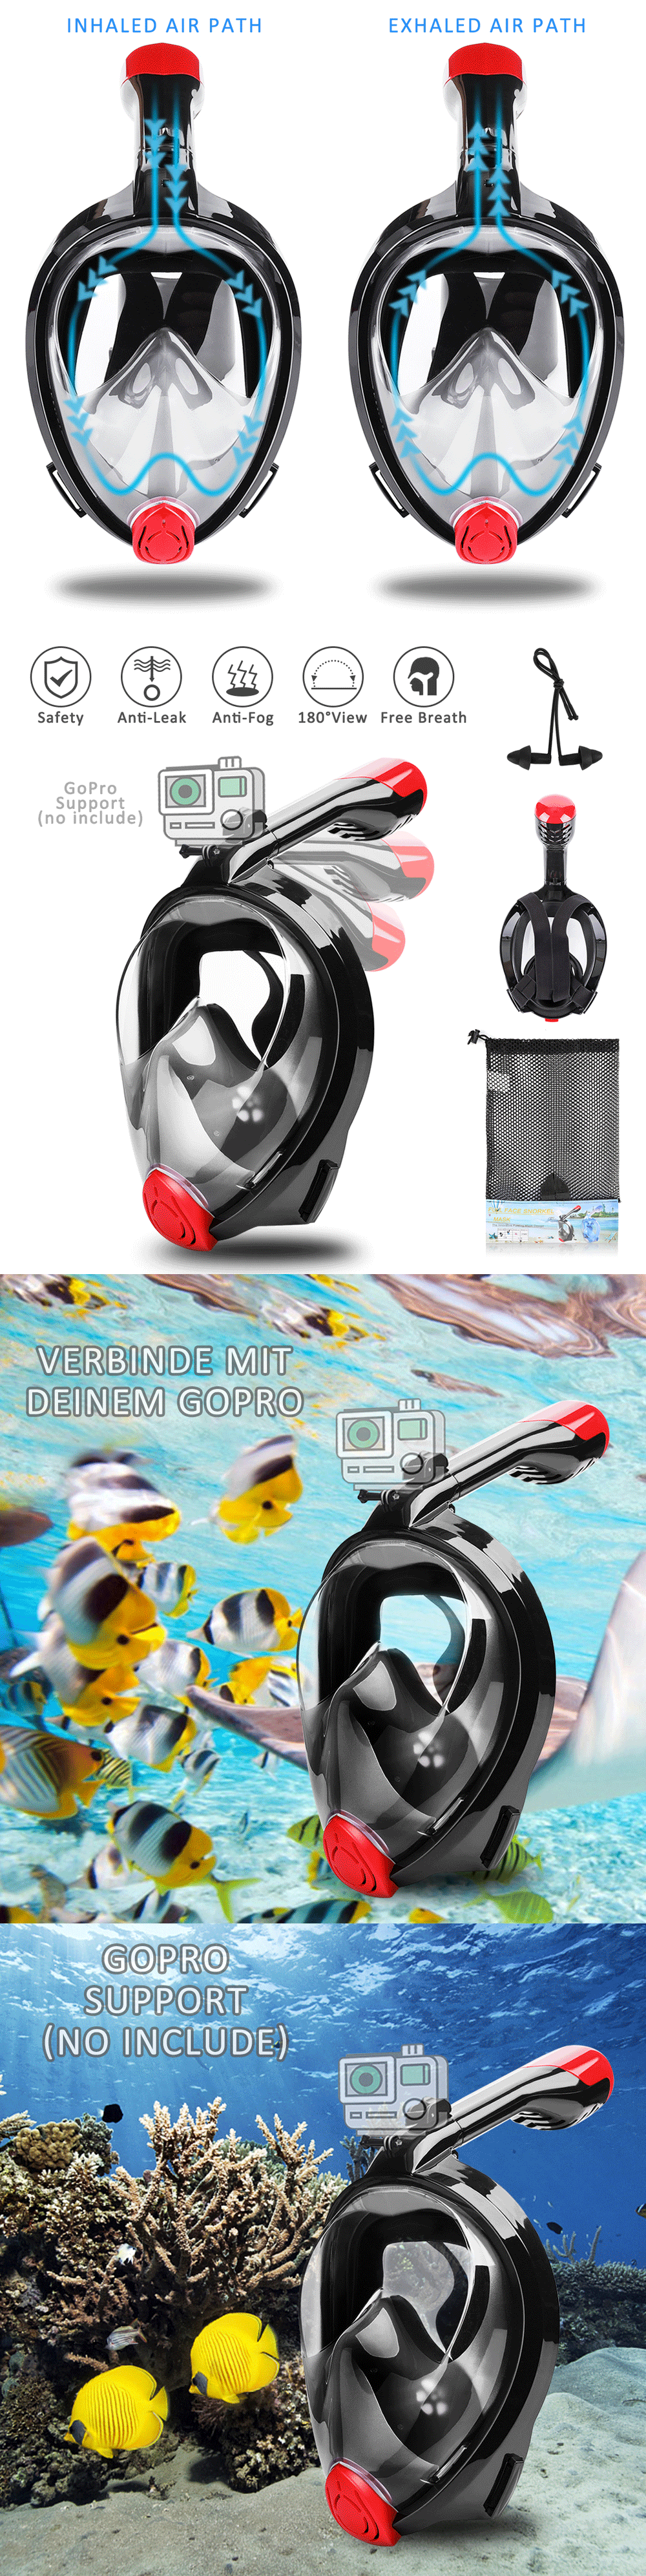 Full-Face-Snorkeling-Mask-Underwater-Anti-Fog-Swim-Diving-Scuba-Mask-With-Detachable-Camera-Holder-1383468-2